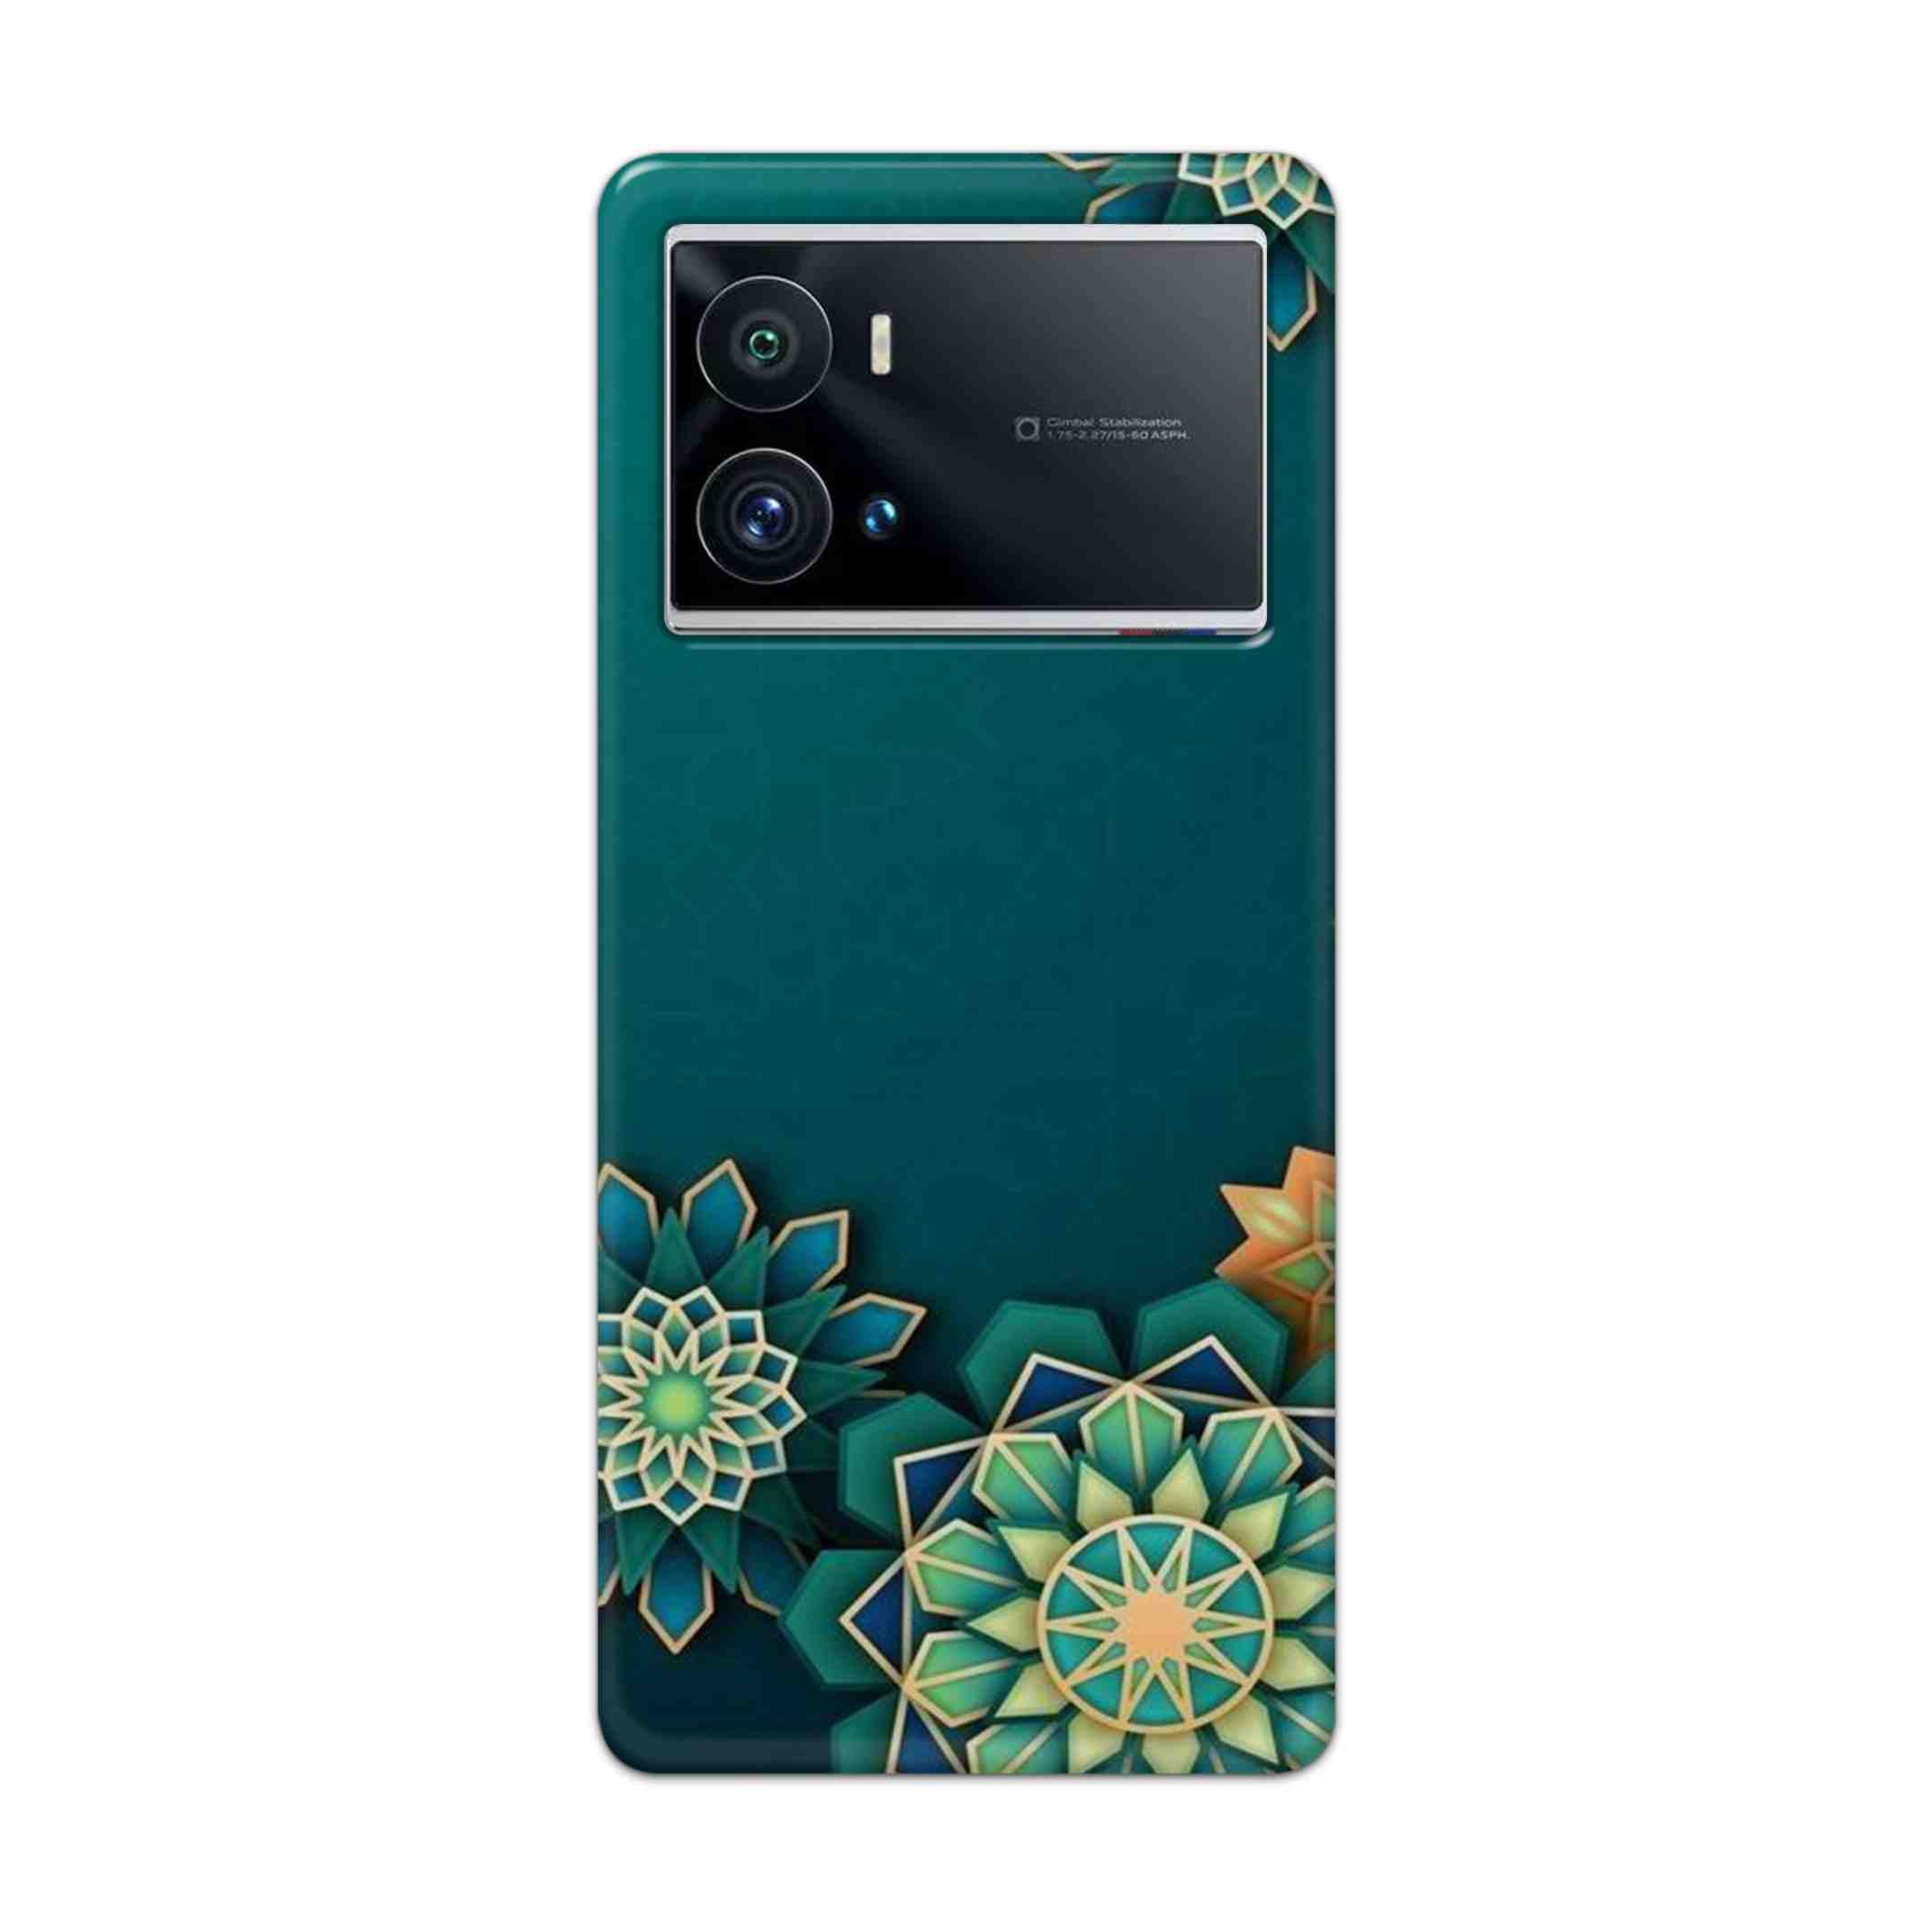 Buy Green Flower Hard Back Mobile Phone Case Cover For iQOO 9 Pro 5G Online